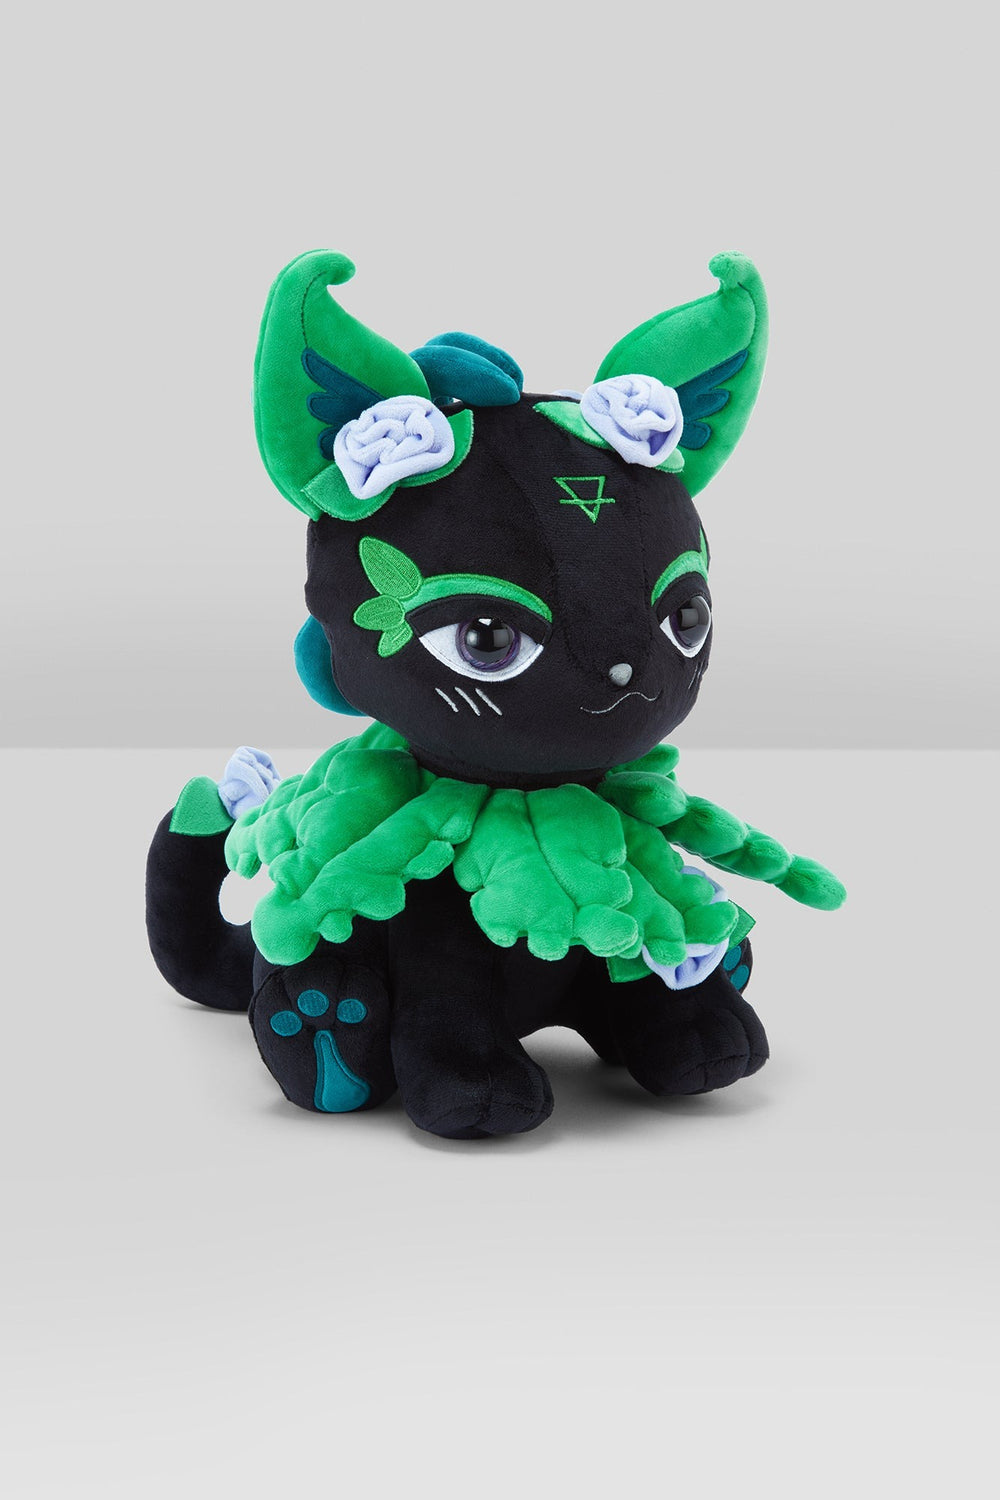 Black cat stuffed animal